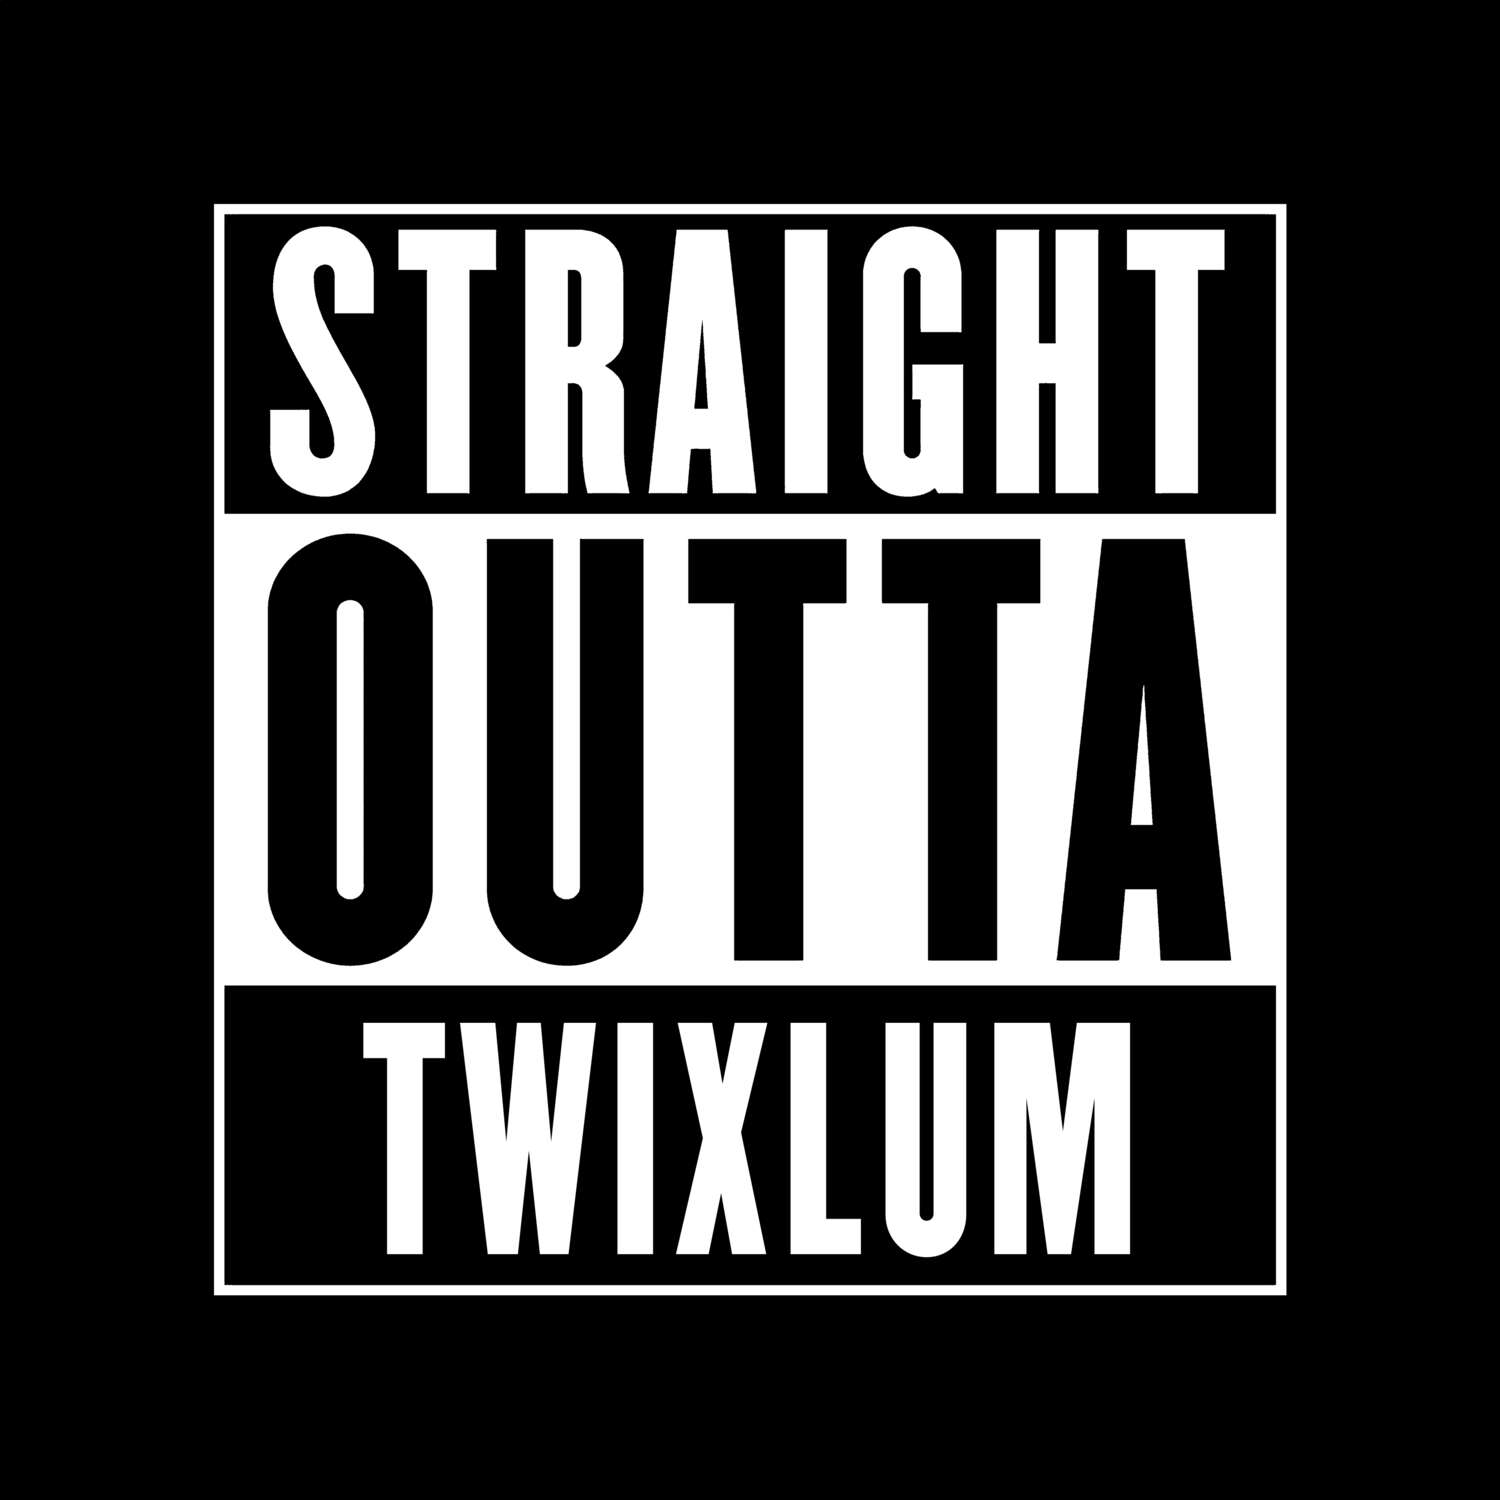 Twixlum T-Shirt »Straight Outta«